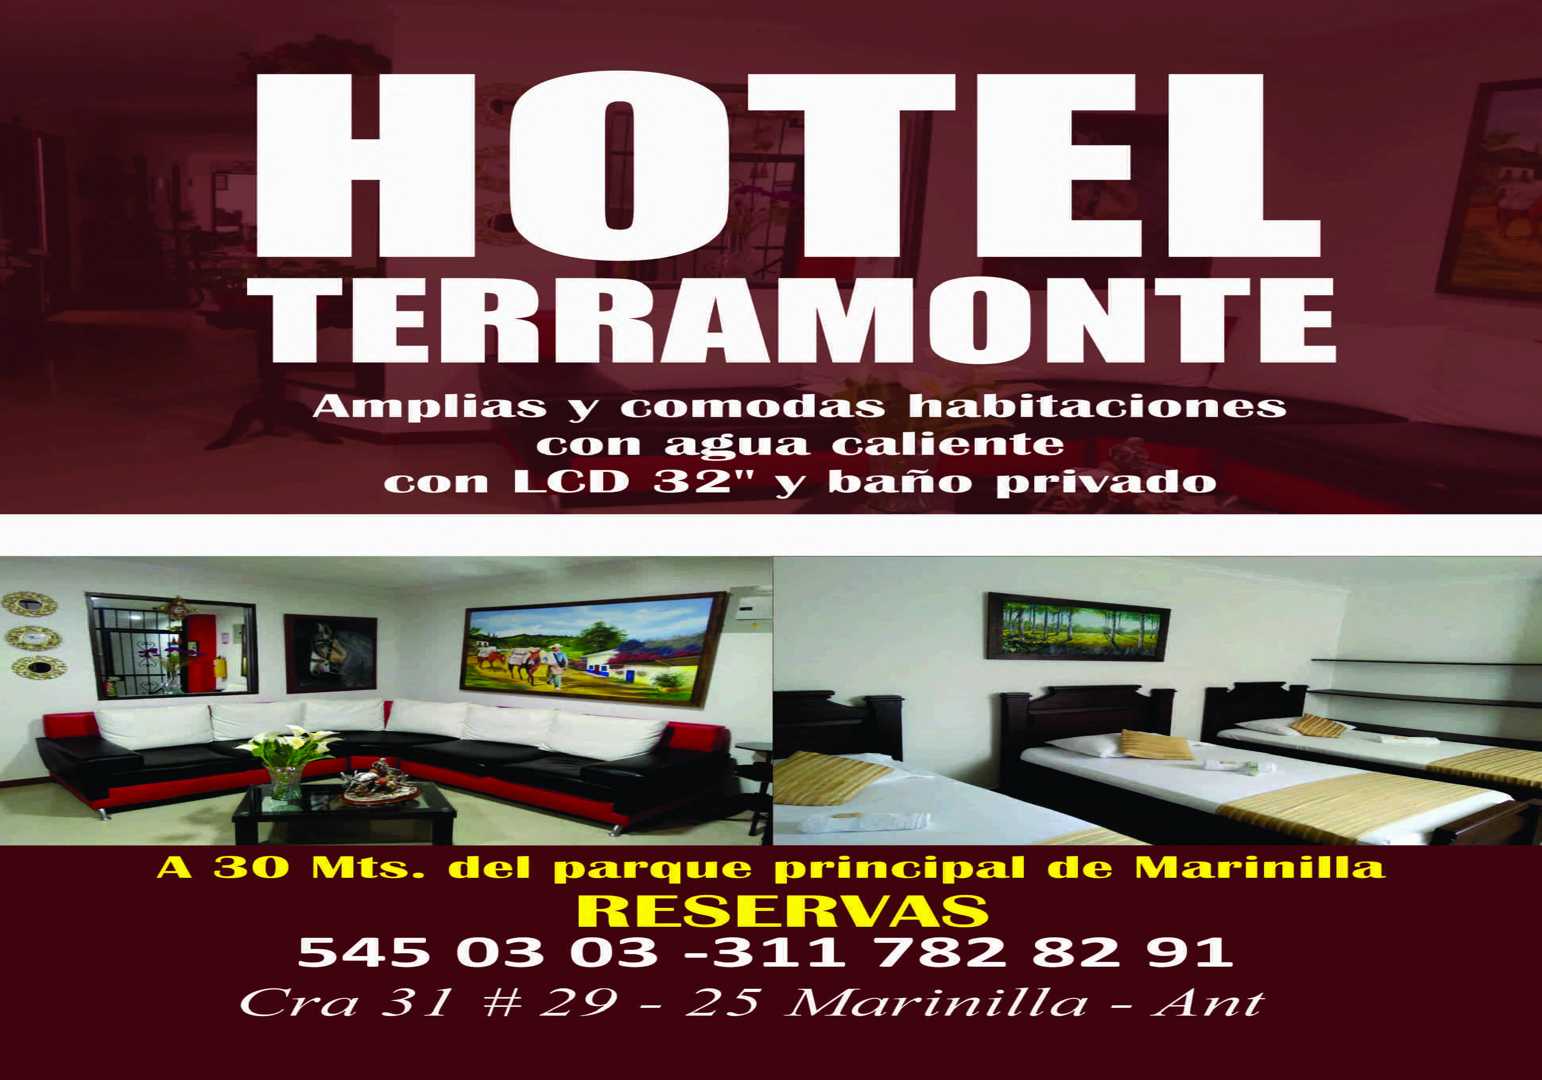 Hotel Terramonte - Marinilla Antioquia